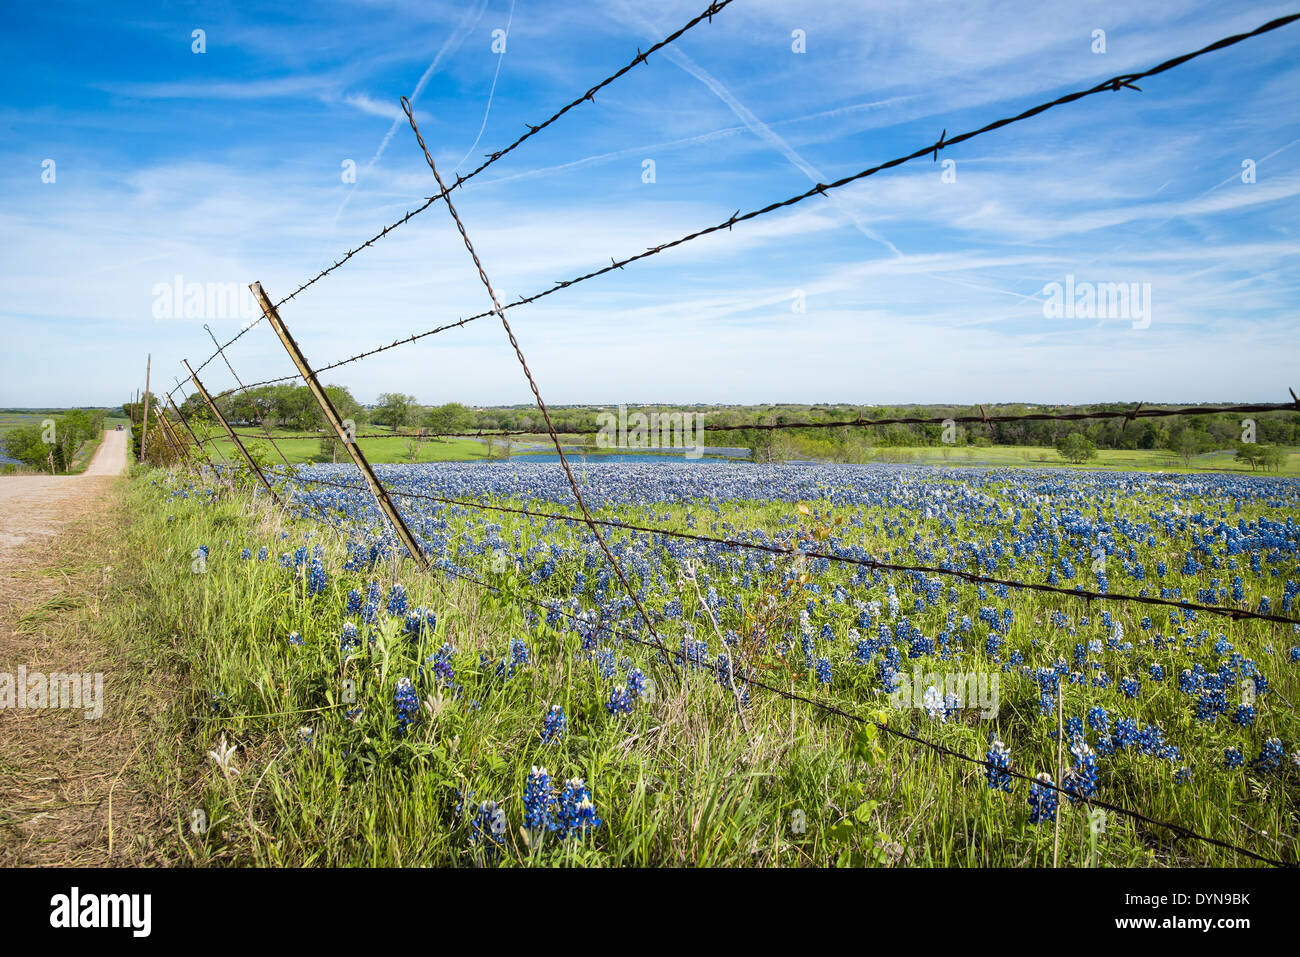 Bluebonnet Feld und Zaun entlang einer Landstraße in Texas Frühling Stockfoto